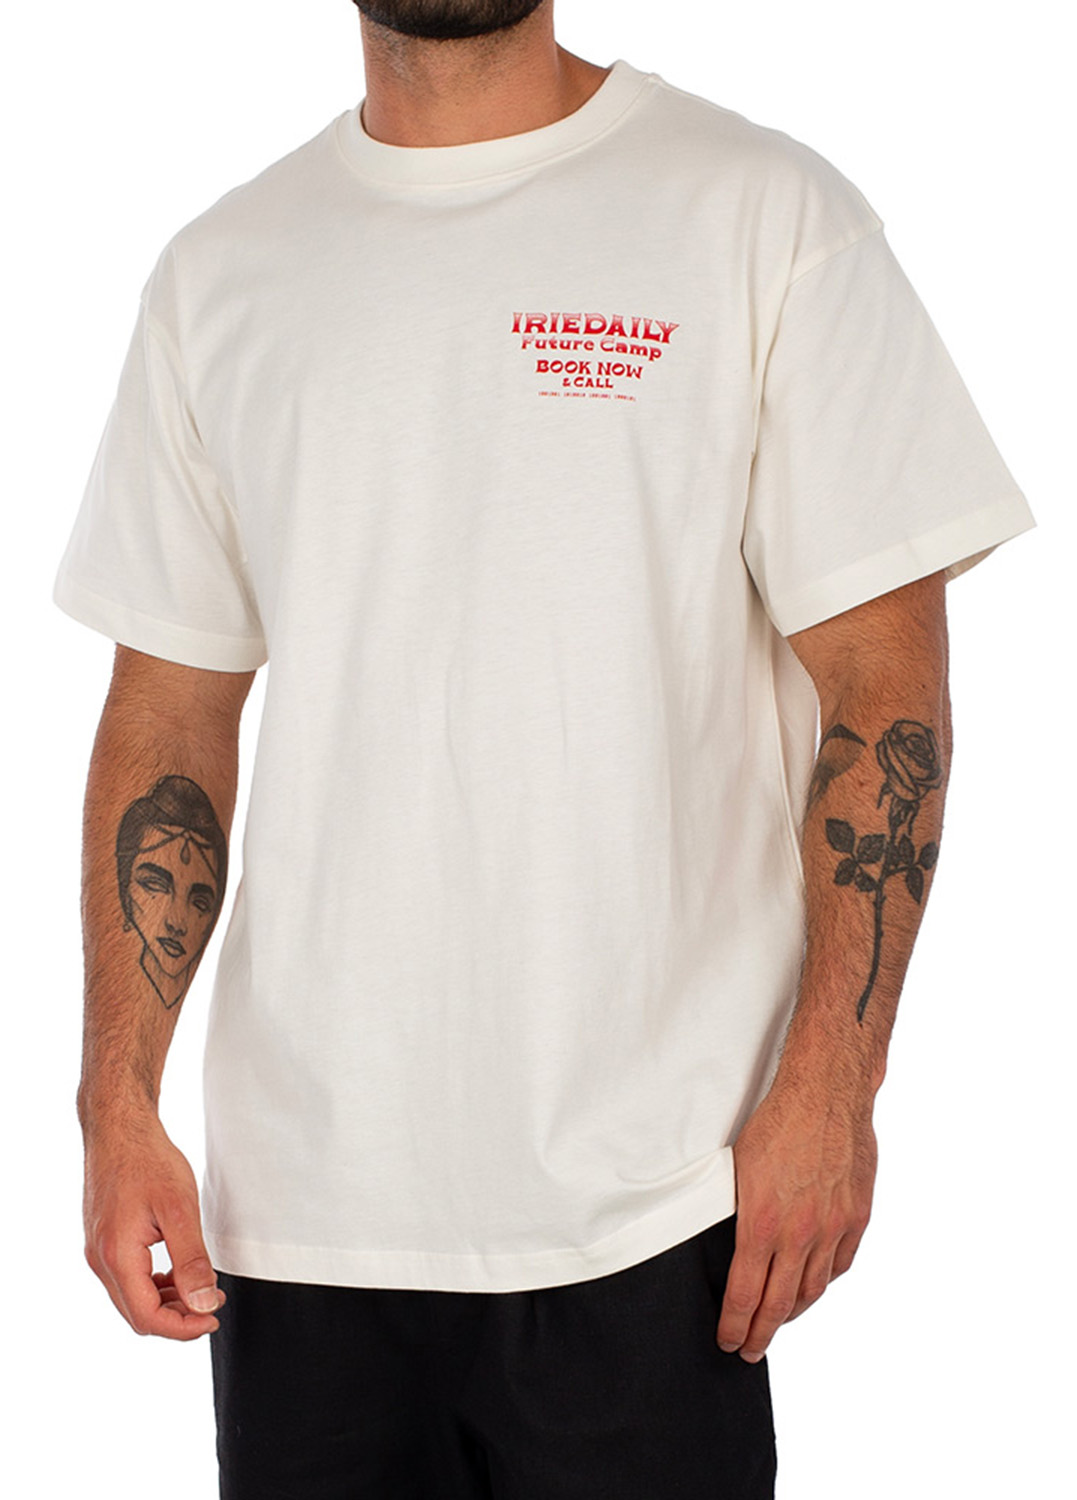 Iriedaily Future Camp T-Shirt Relaxed T-Shirt Offwhite